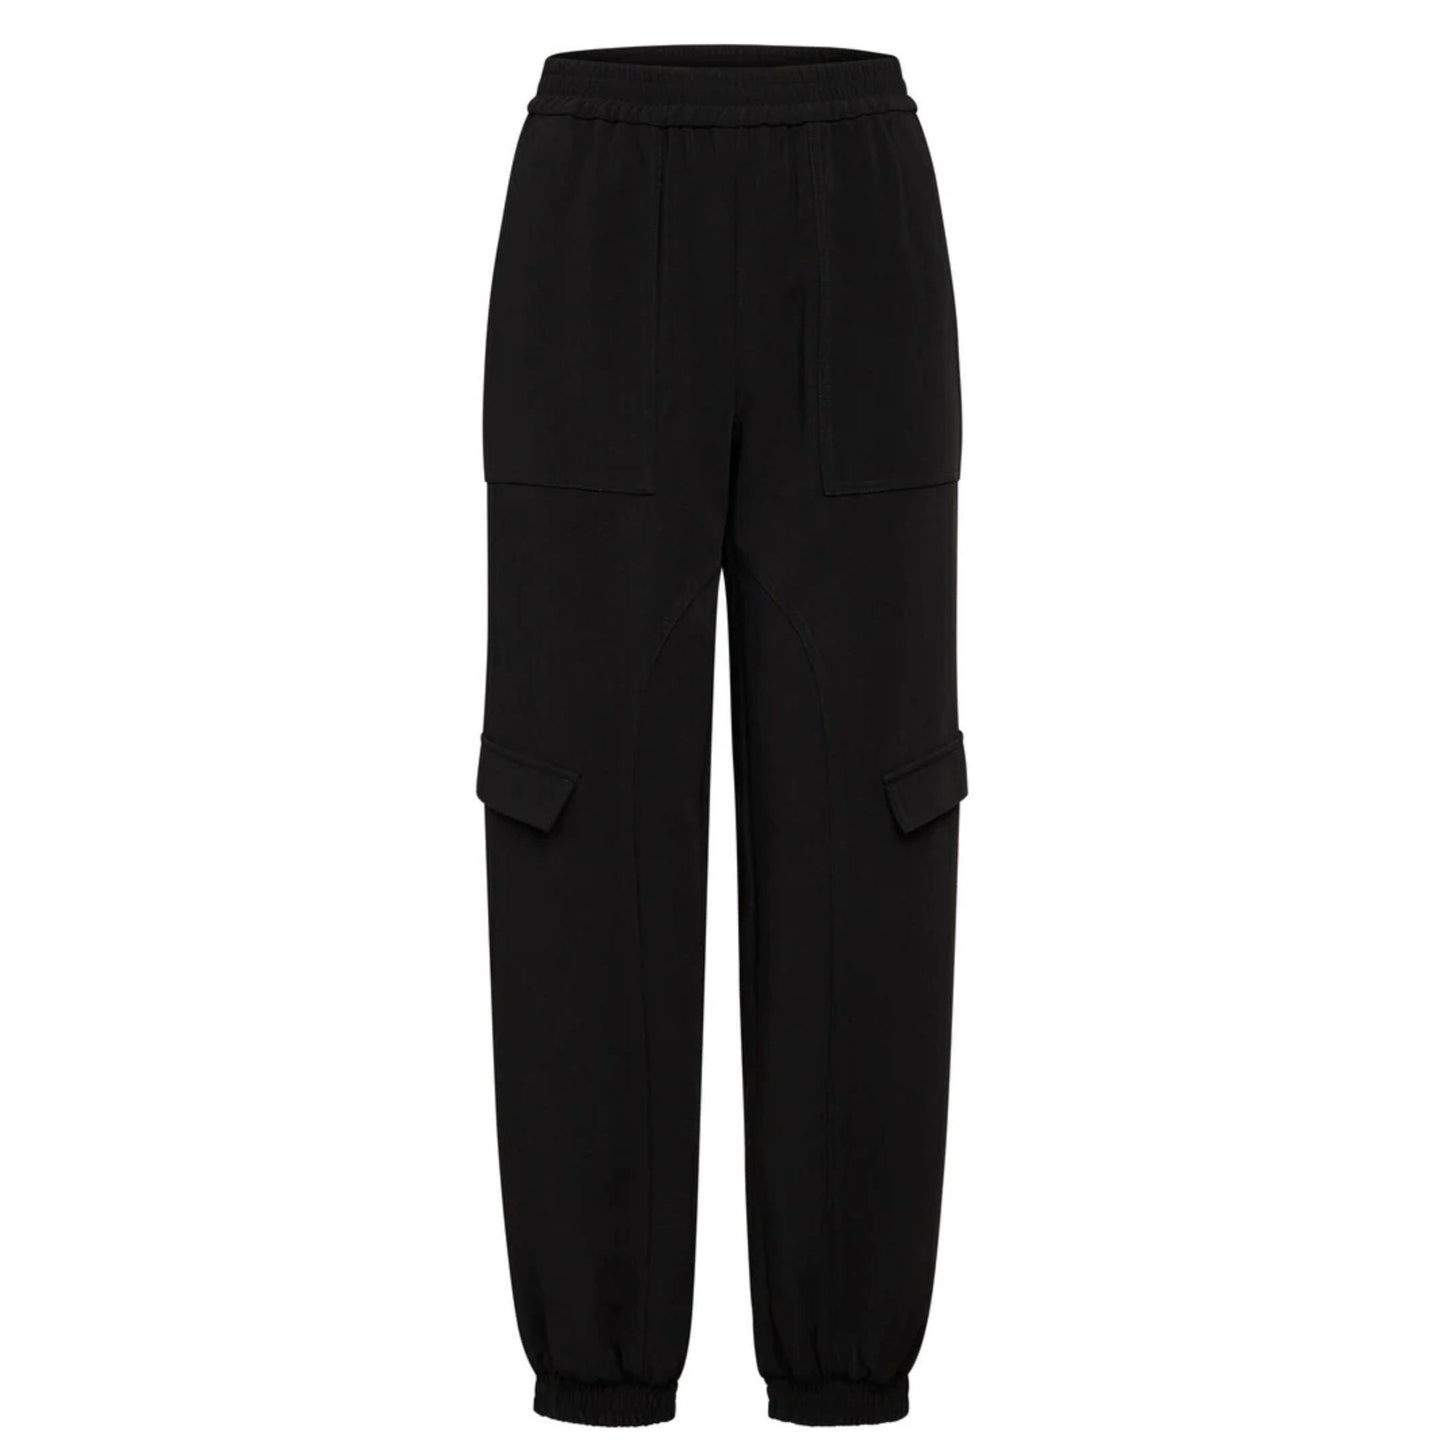 Bruuns Bazaar - Brassica Cilla pants - Black